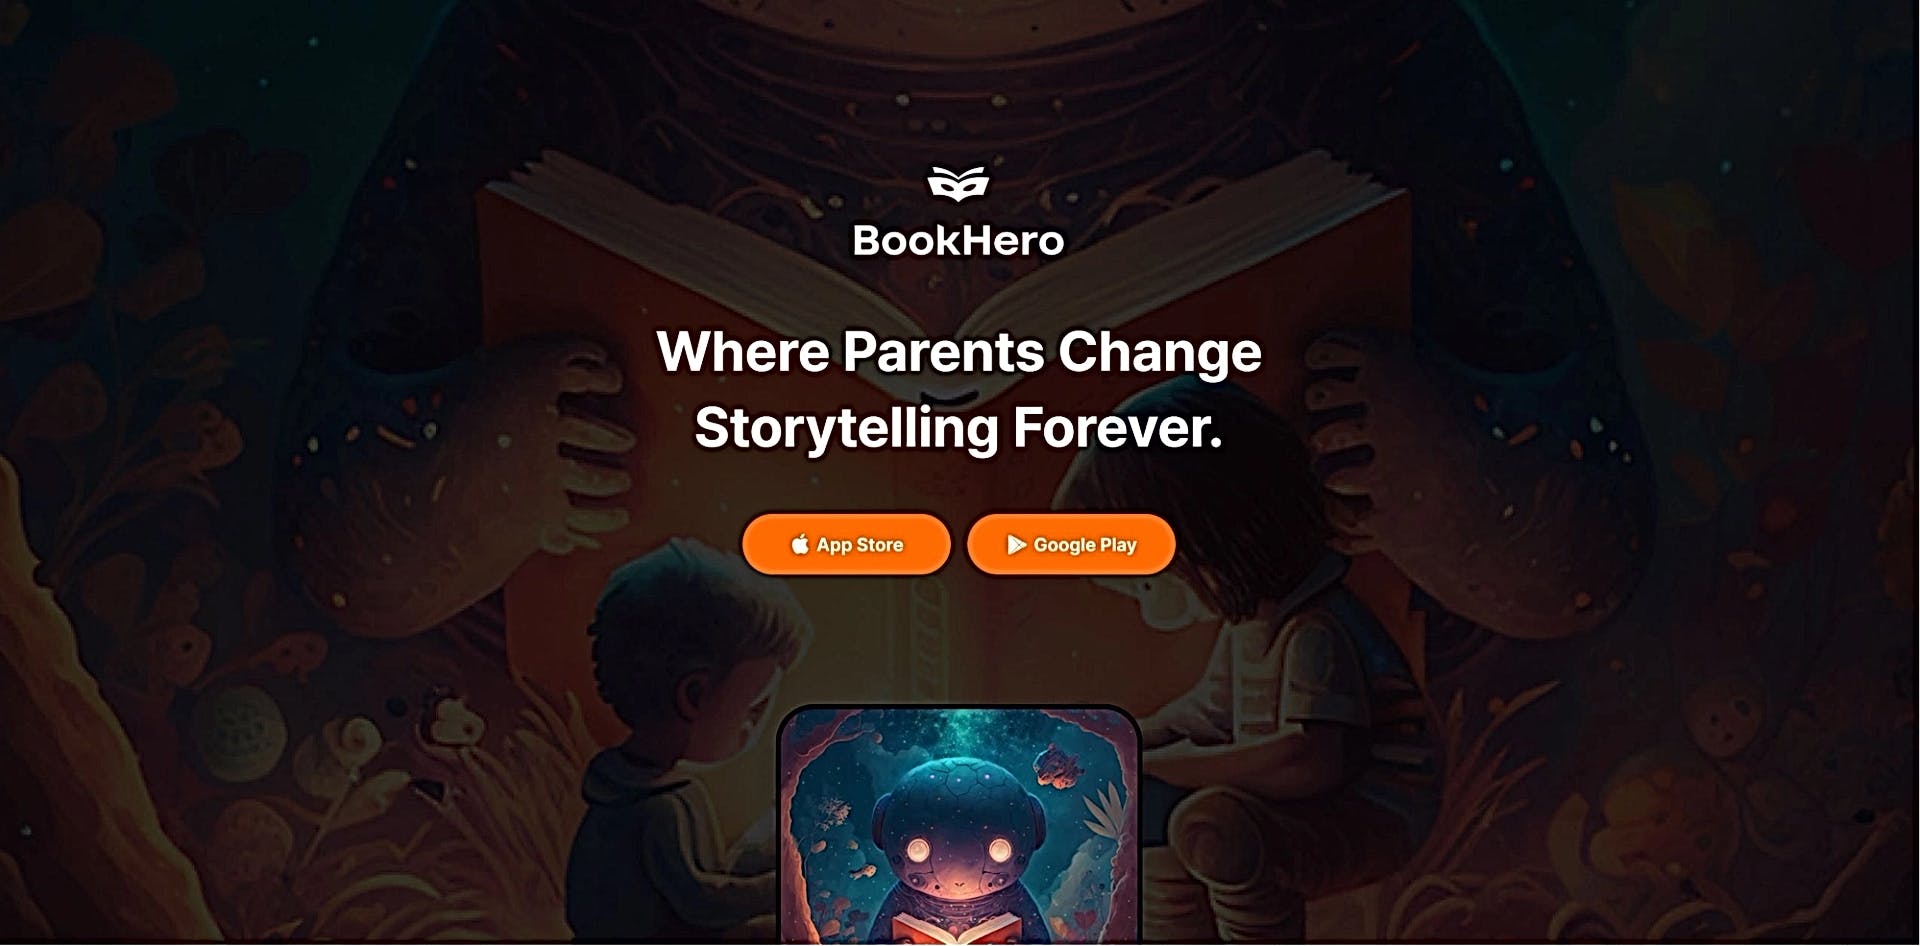 BookHero featured